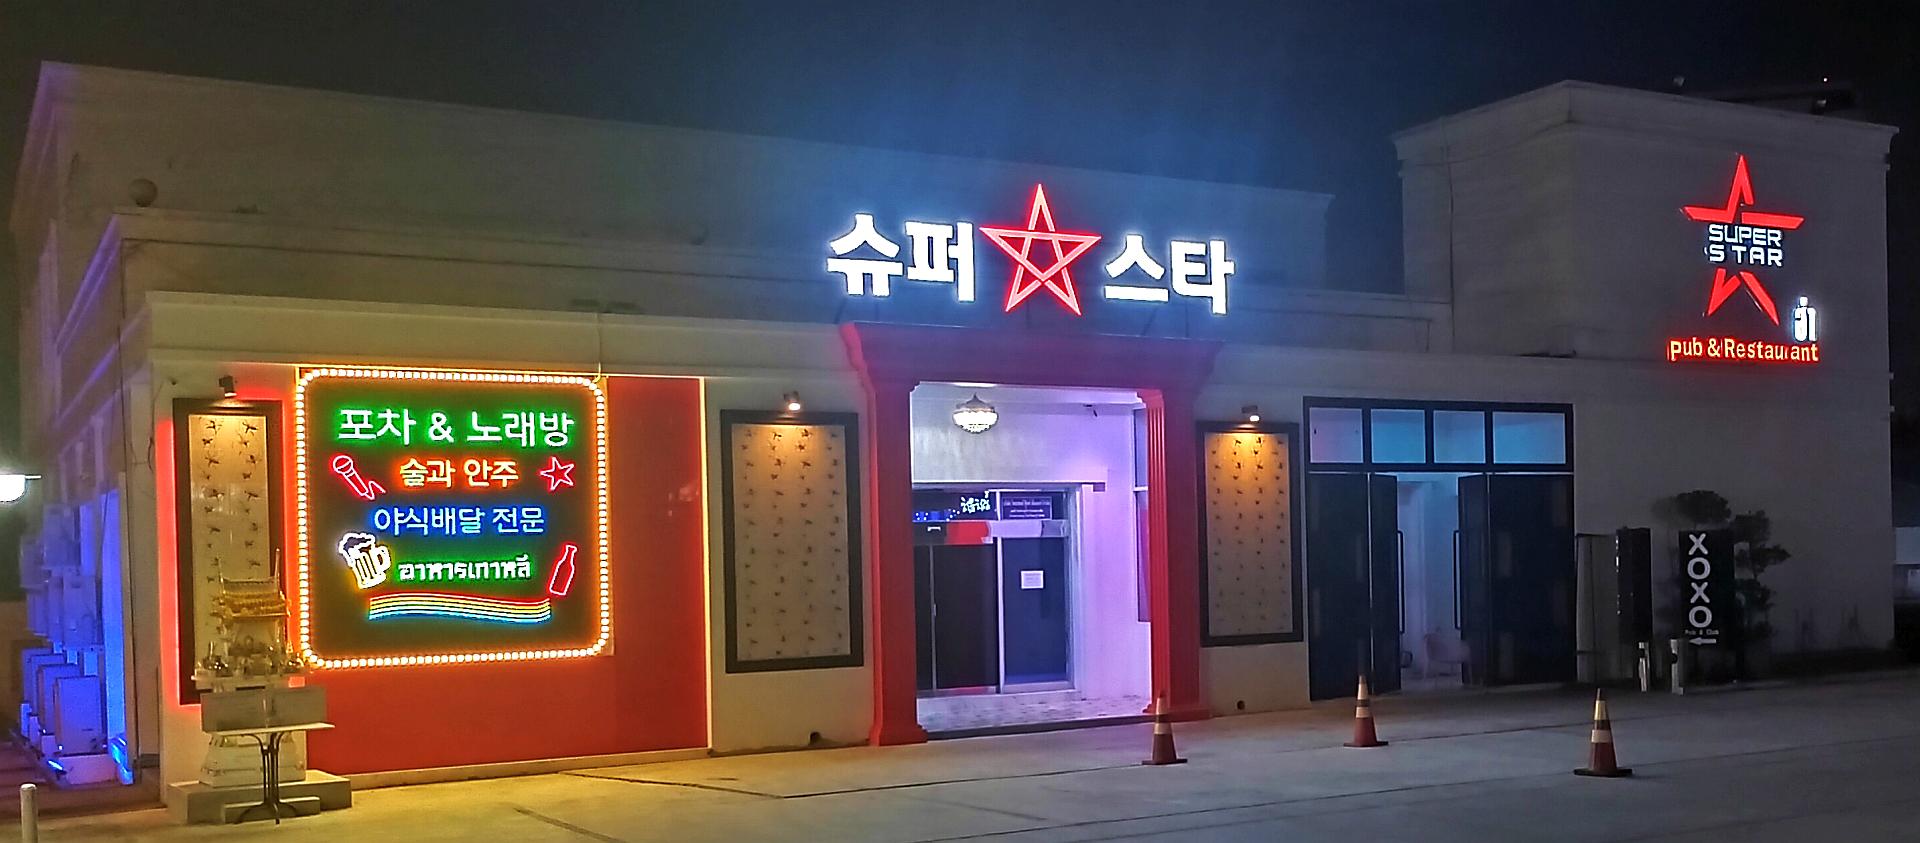 Super Star Pub